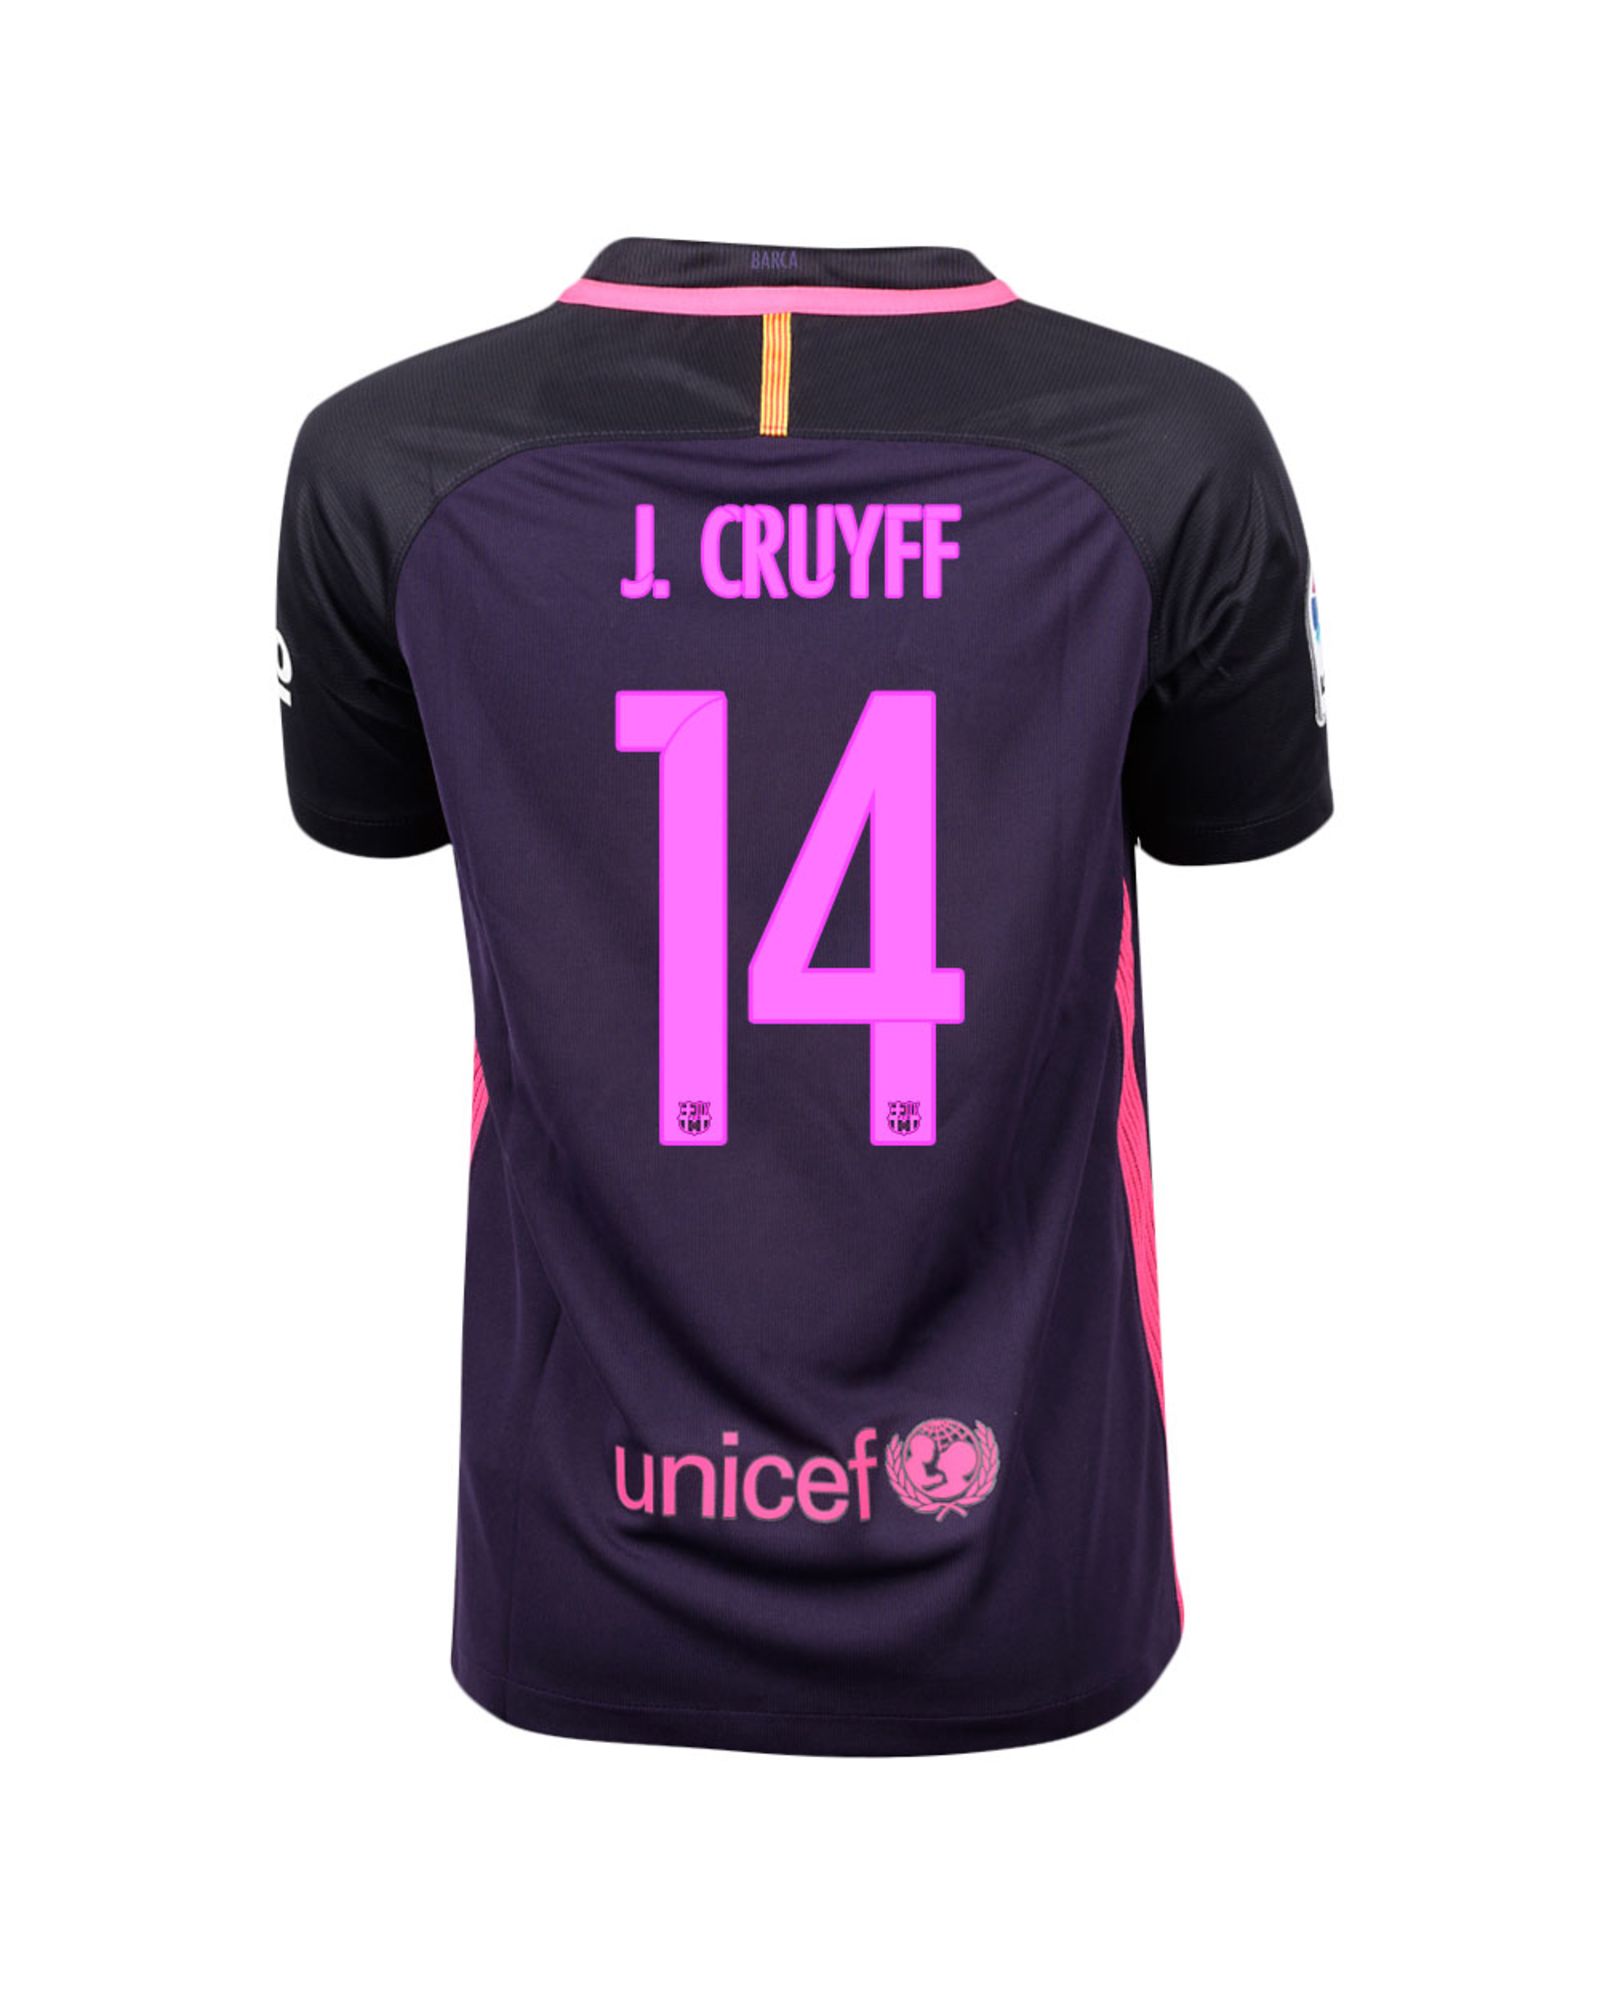 Camiseta 2ª FC Barcelona 2016/2017 Cruyff Stadium Junior - Fútbol Factory